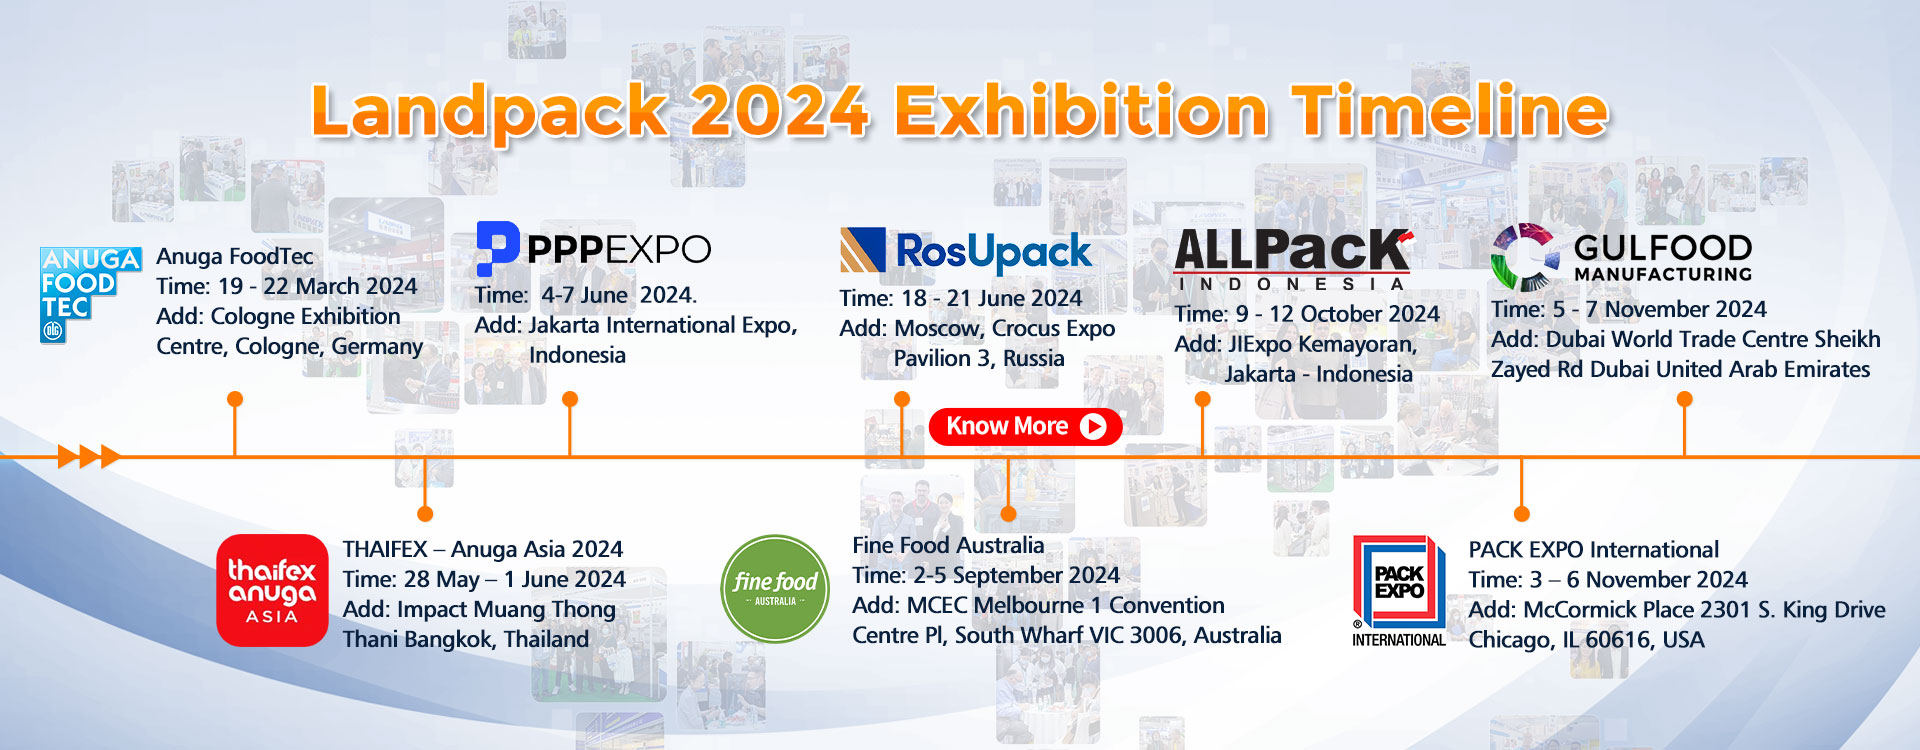 Landpack 2024 Exhibition Timeline - Where Will We Meet?